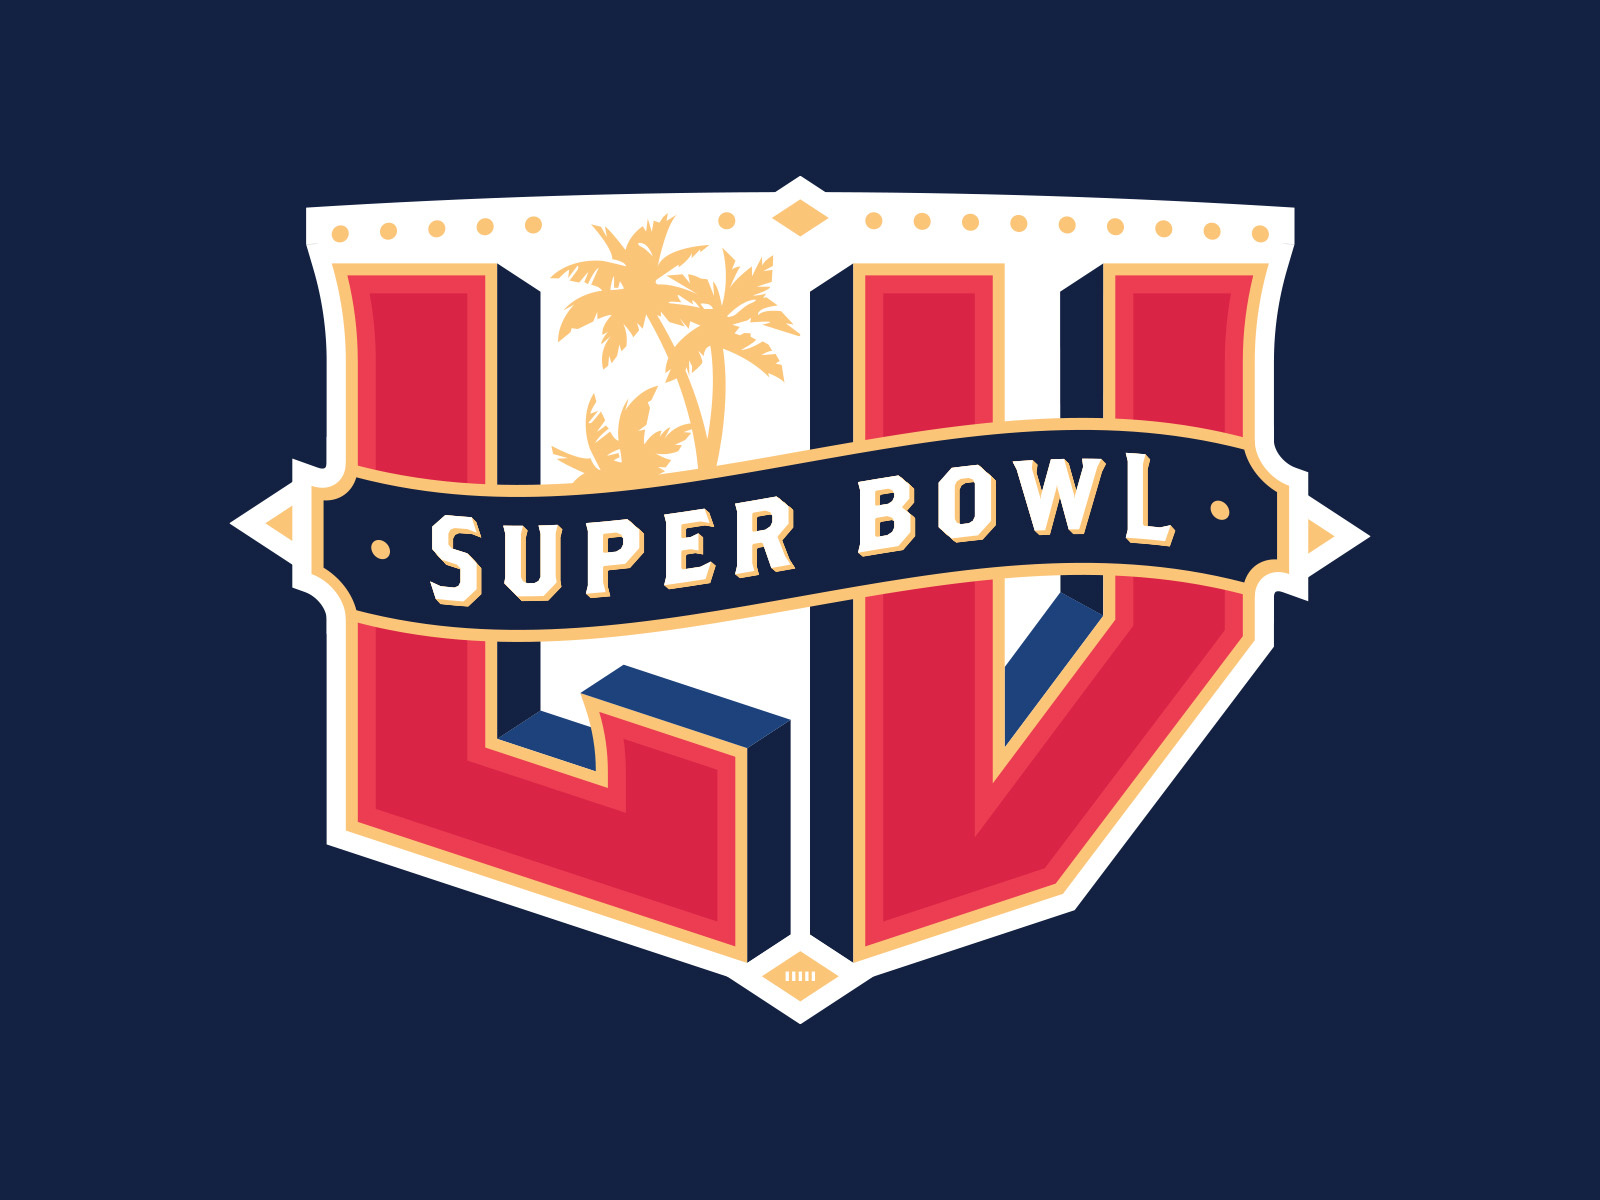 Super Bowl LVI Redesign by Adam Hawkins on Dribbble